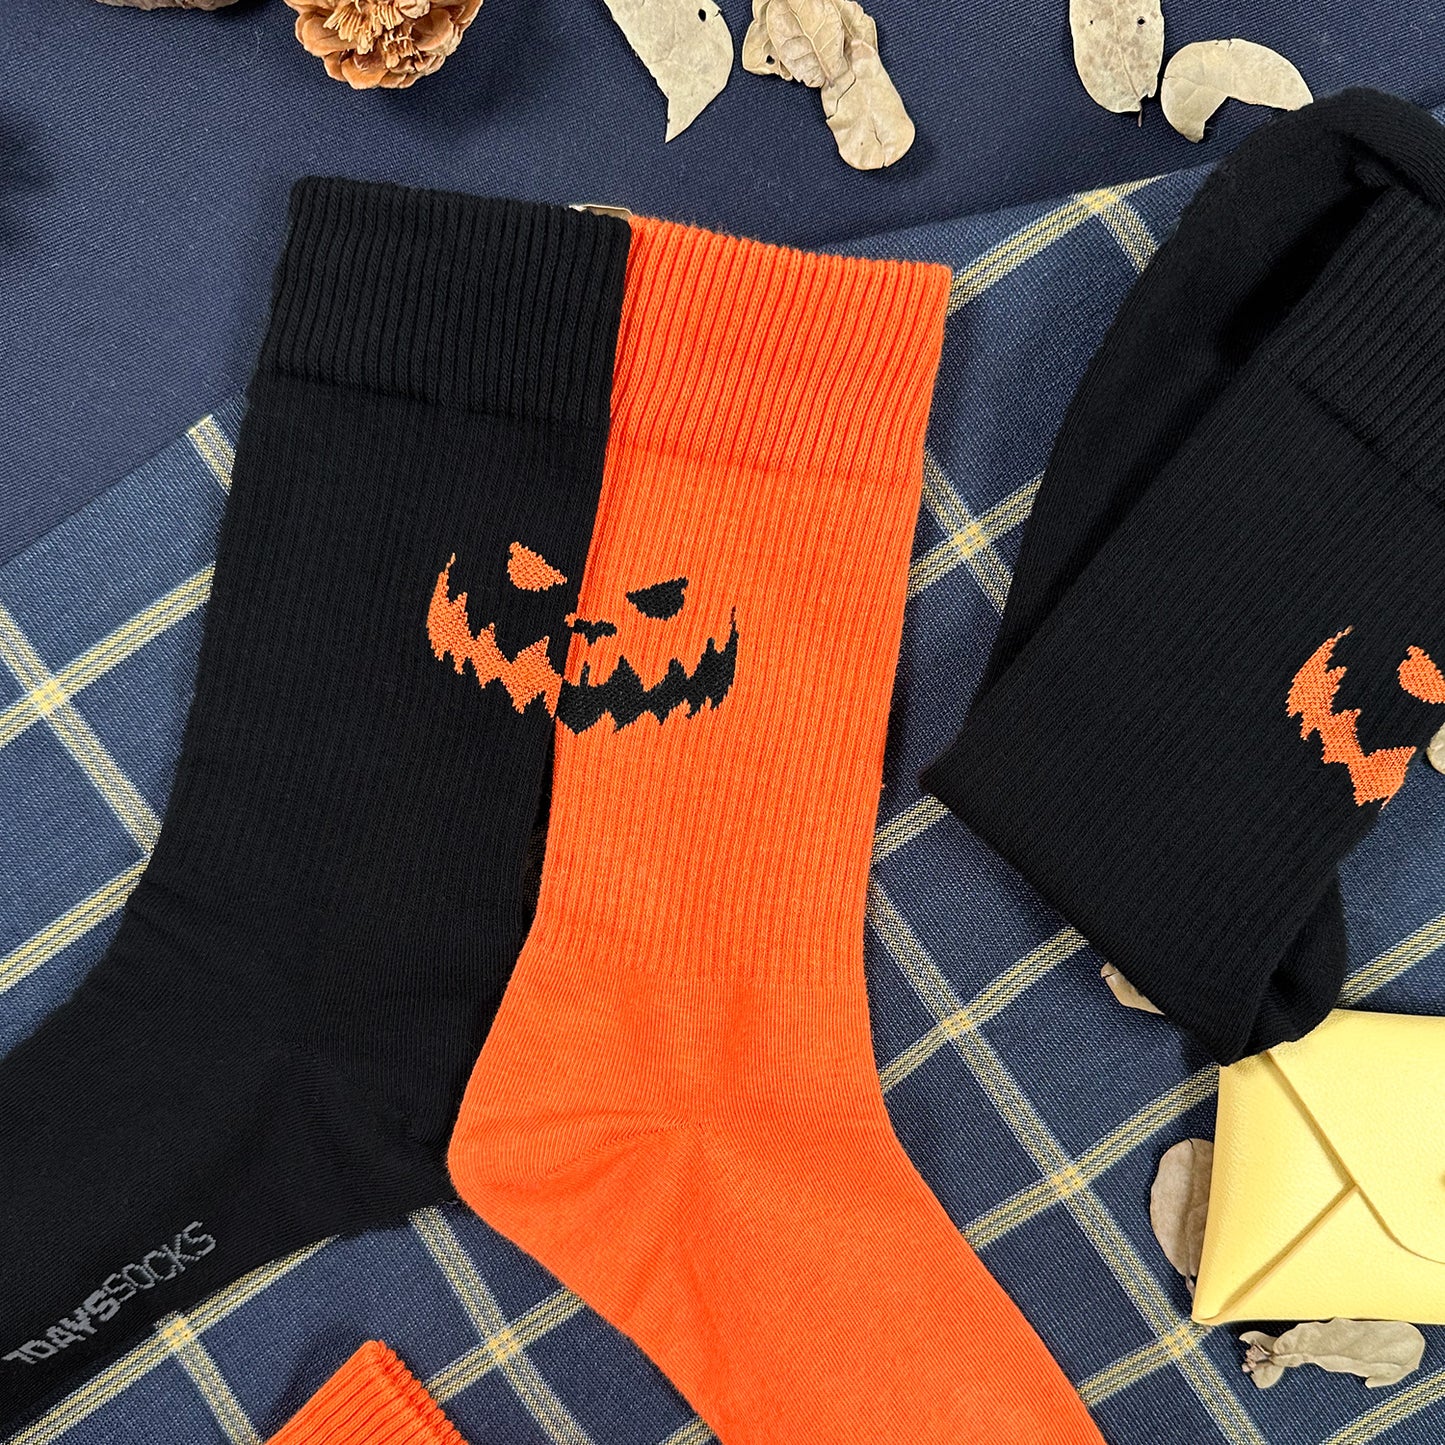 Women's Crew Halloween Style 1 Socks